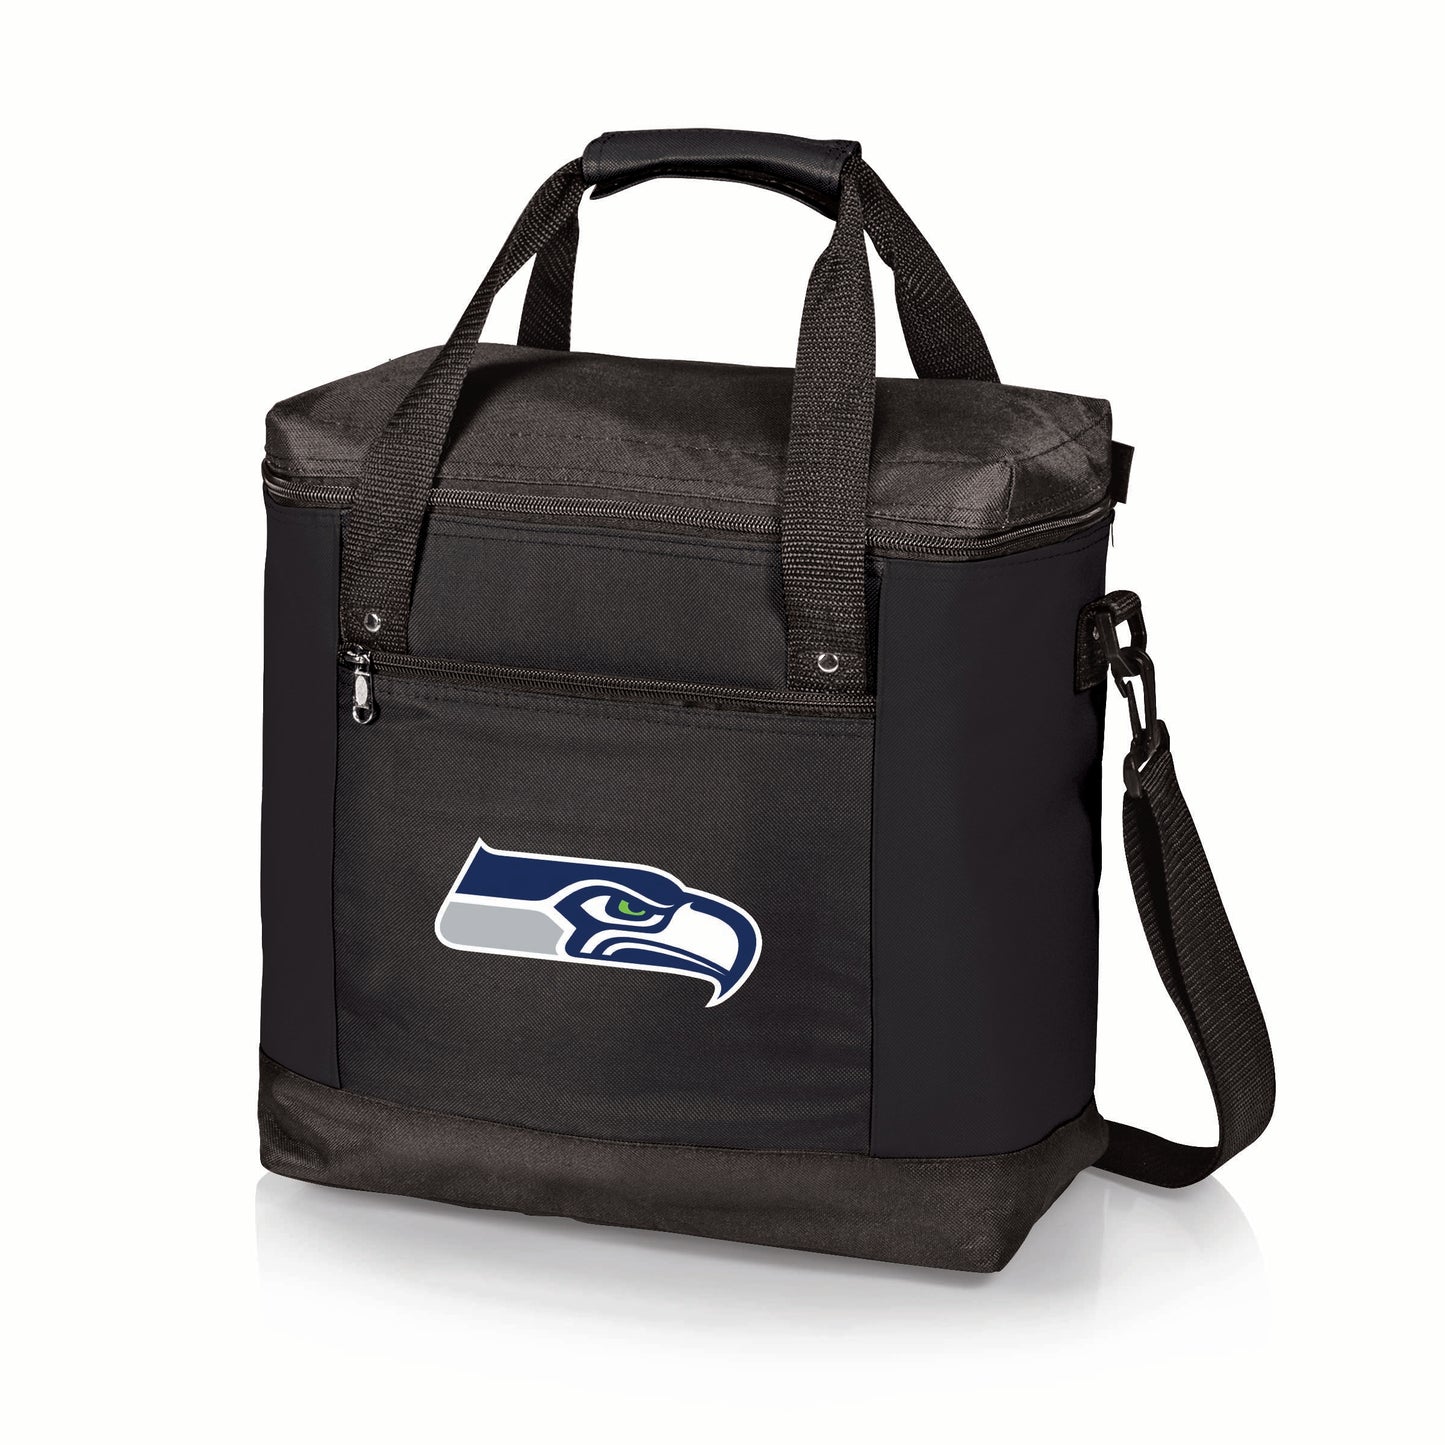 Seattle Seahawks - Montero Cooler Tote Bag